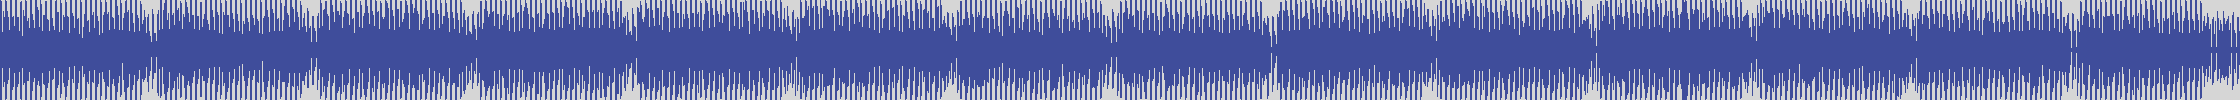 nf_boyz_records [NFY021] Xemnas - Stop It [Acid Tech Mix] audio wave form